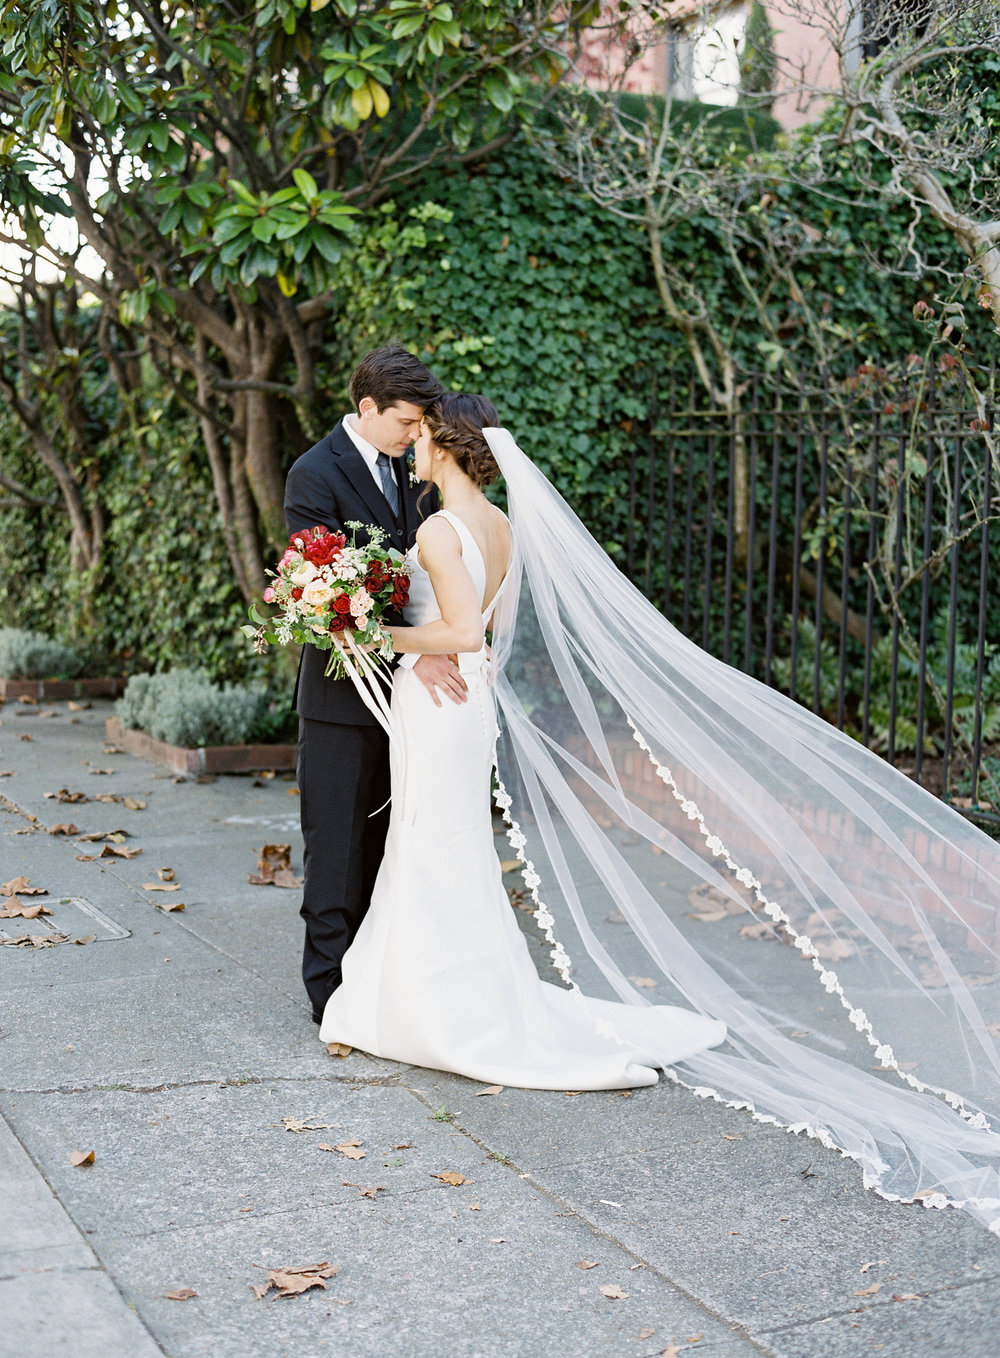 Meghan Mehan Photography - California Wedding Photographer | San Francisco City Hall Wedding 051.jpg